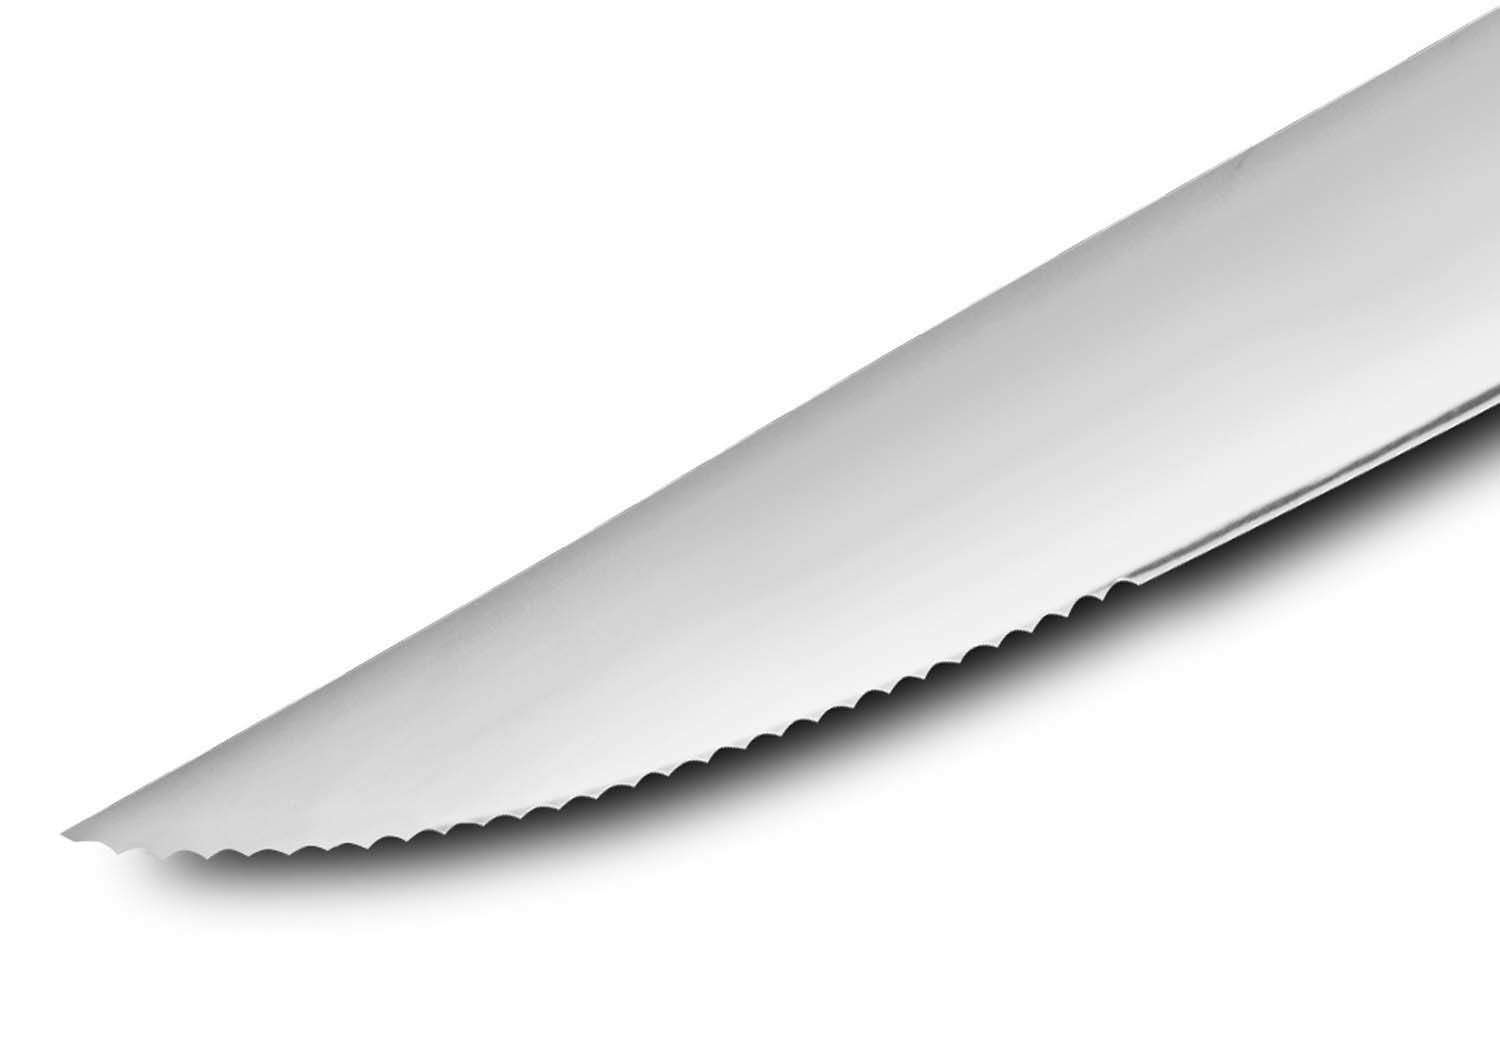 Zwilling J.A. Henckels Stainless 8 Piece Steak Knife Set in